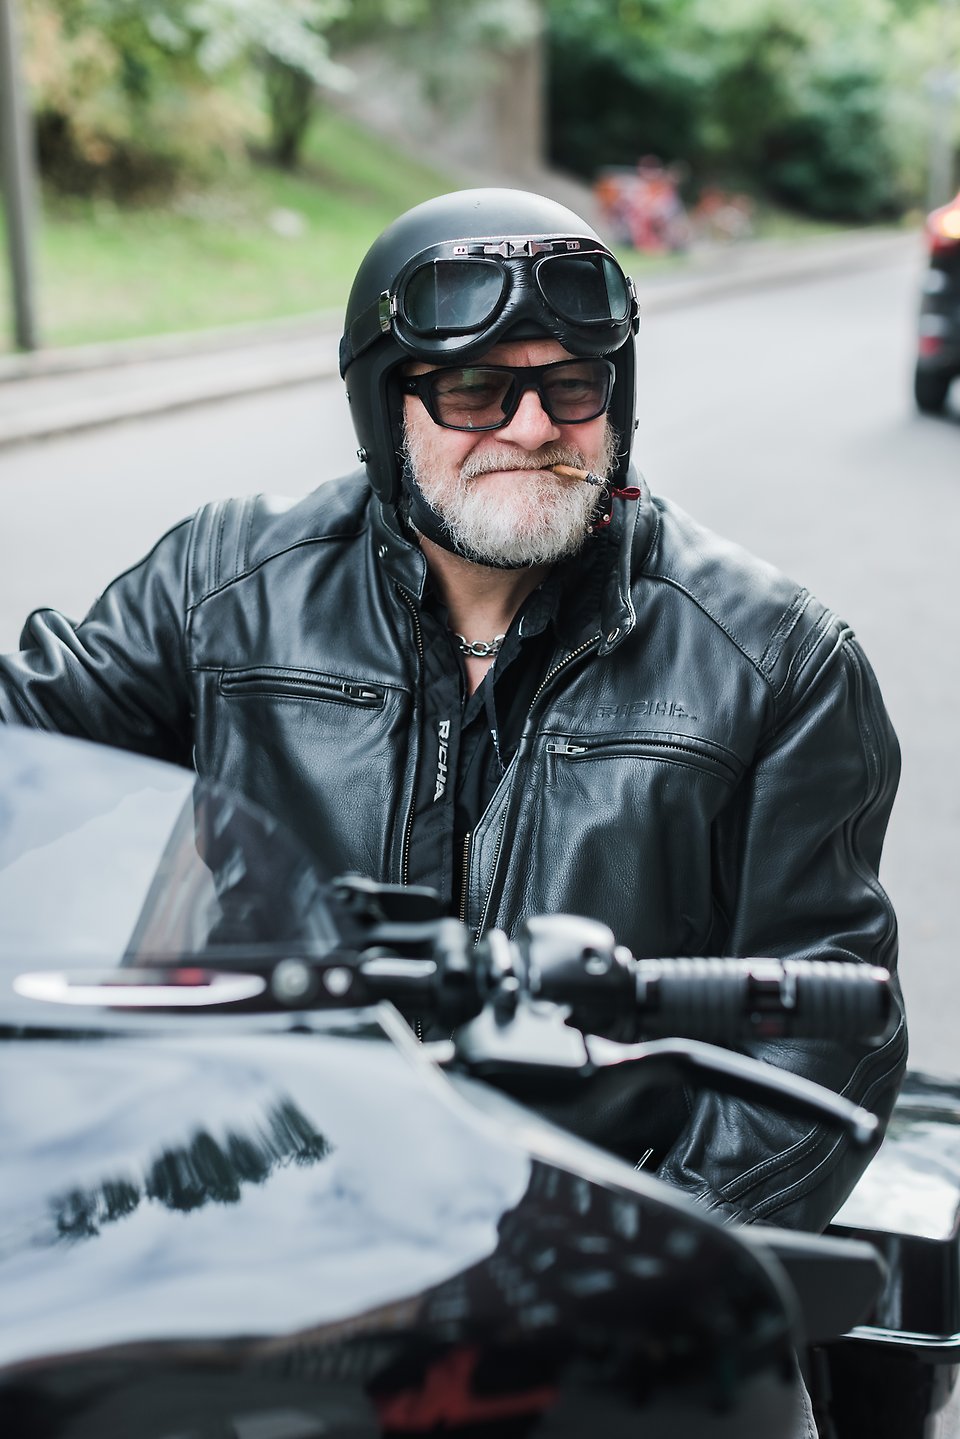 Tuff biker motorcykel cigg i munnen foto Anneli Nygårds